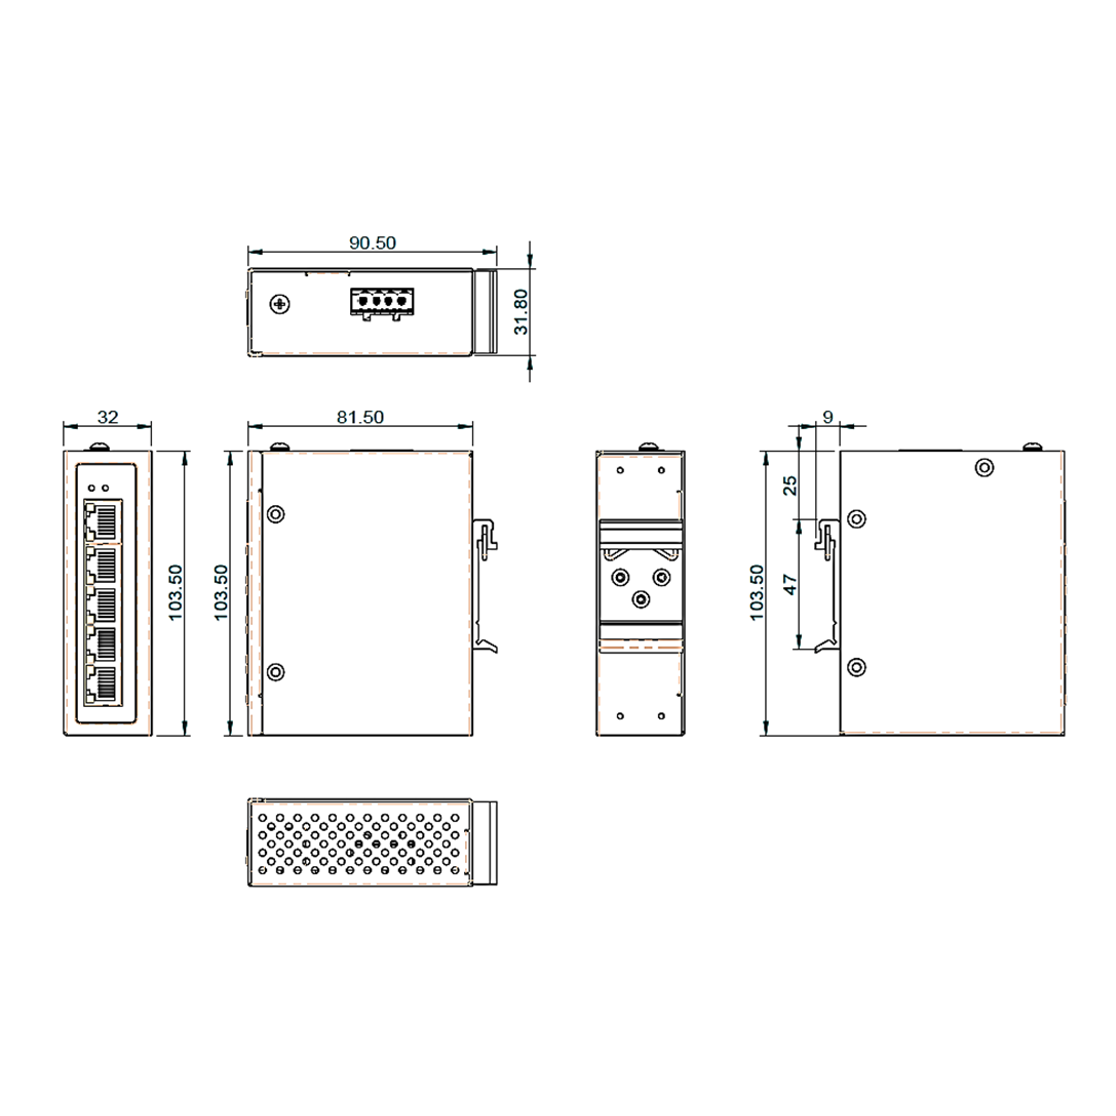 EX41941 - Hardened Unmanaged 4-Port Gigabit PoE & 1-Port Gigabit RJ45 Ethernet Switch